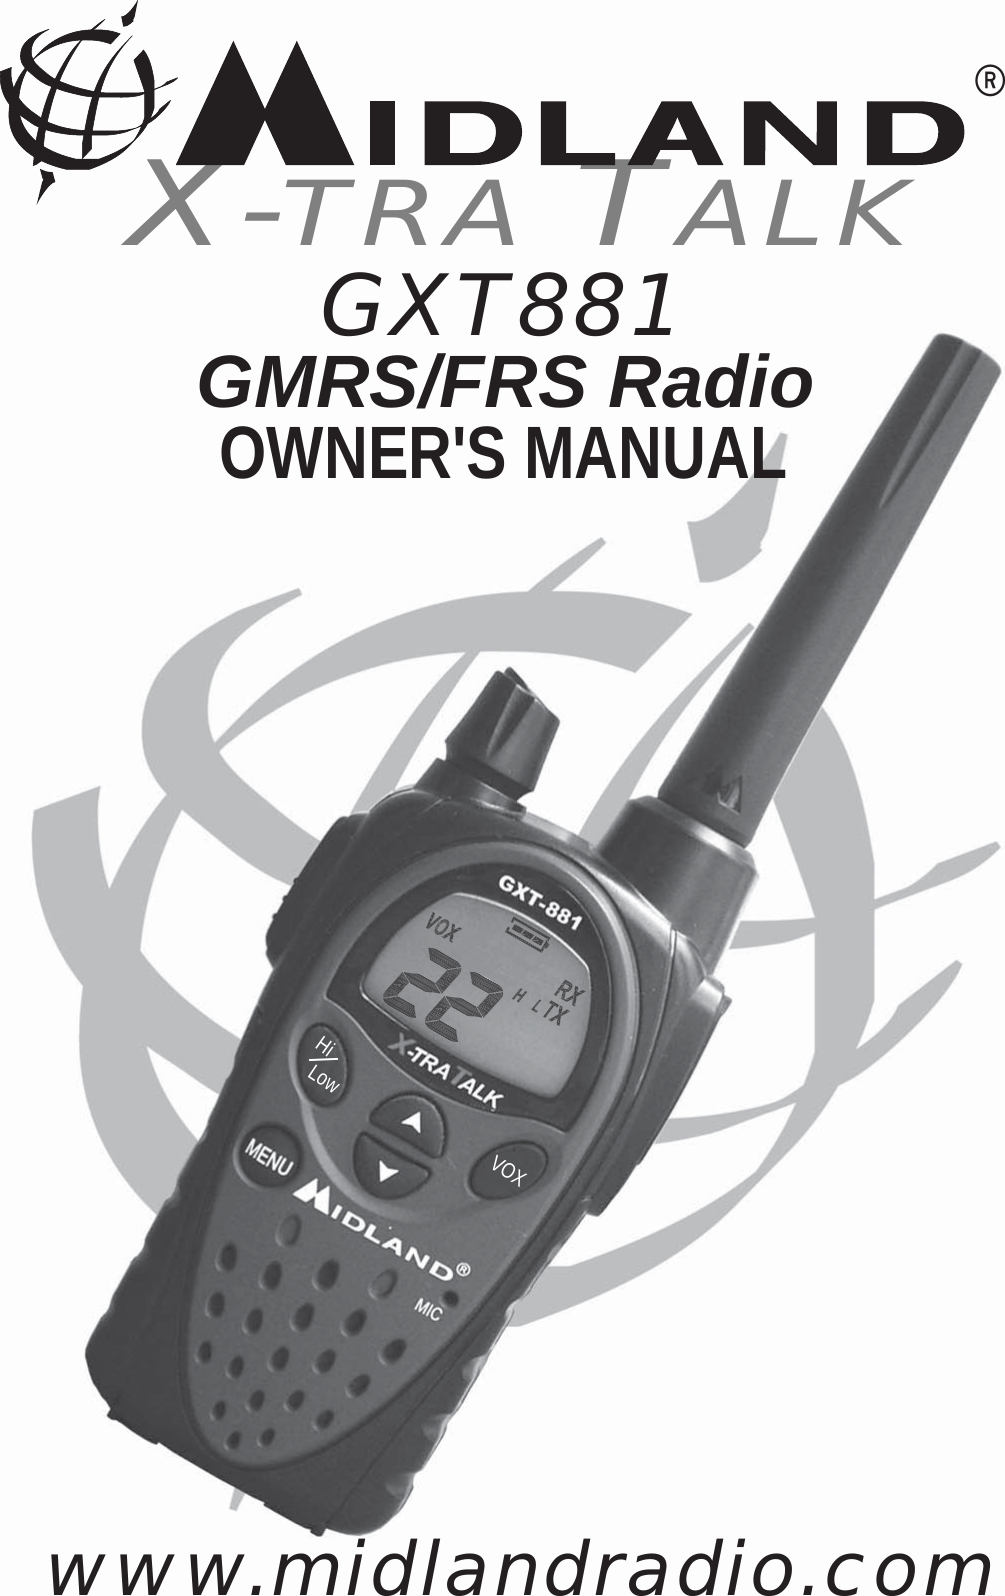      GXT881 GMRS/FRS RadioX-TRA TALK®OWNER&apos;S MANUALwww.midlandradio.comHi/LowVOX